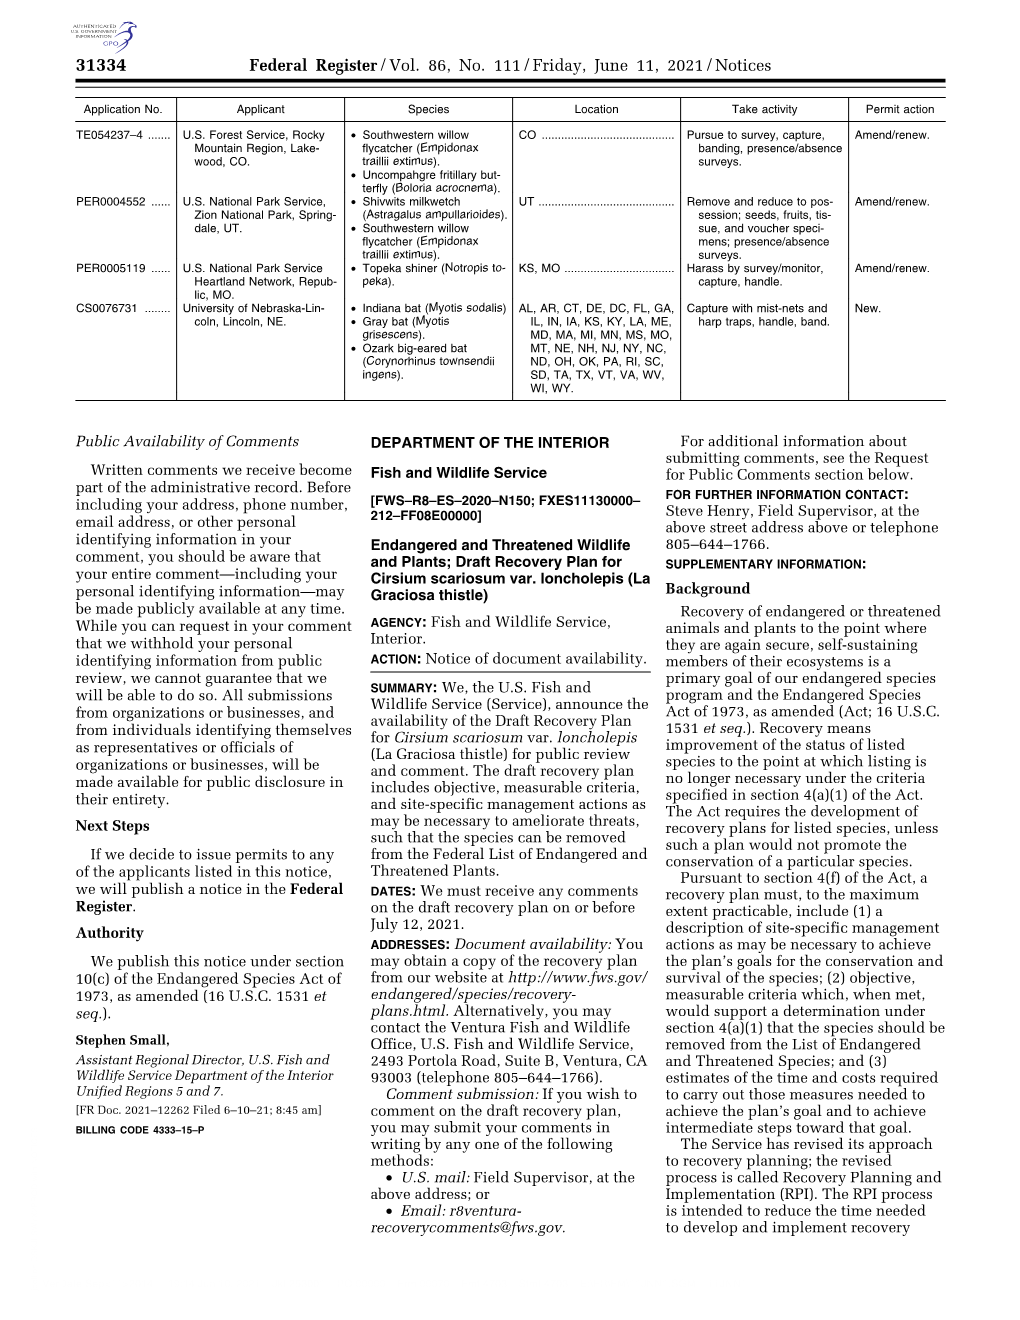 Draft Recovery Plan for Cirsium Scariosum Var. Loncholepis